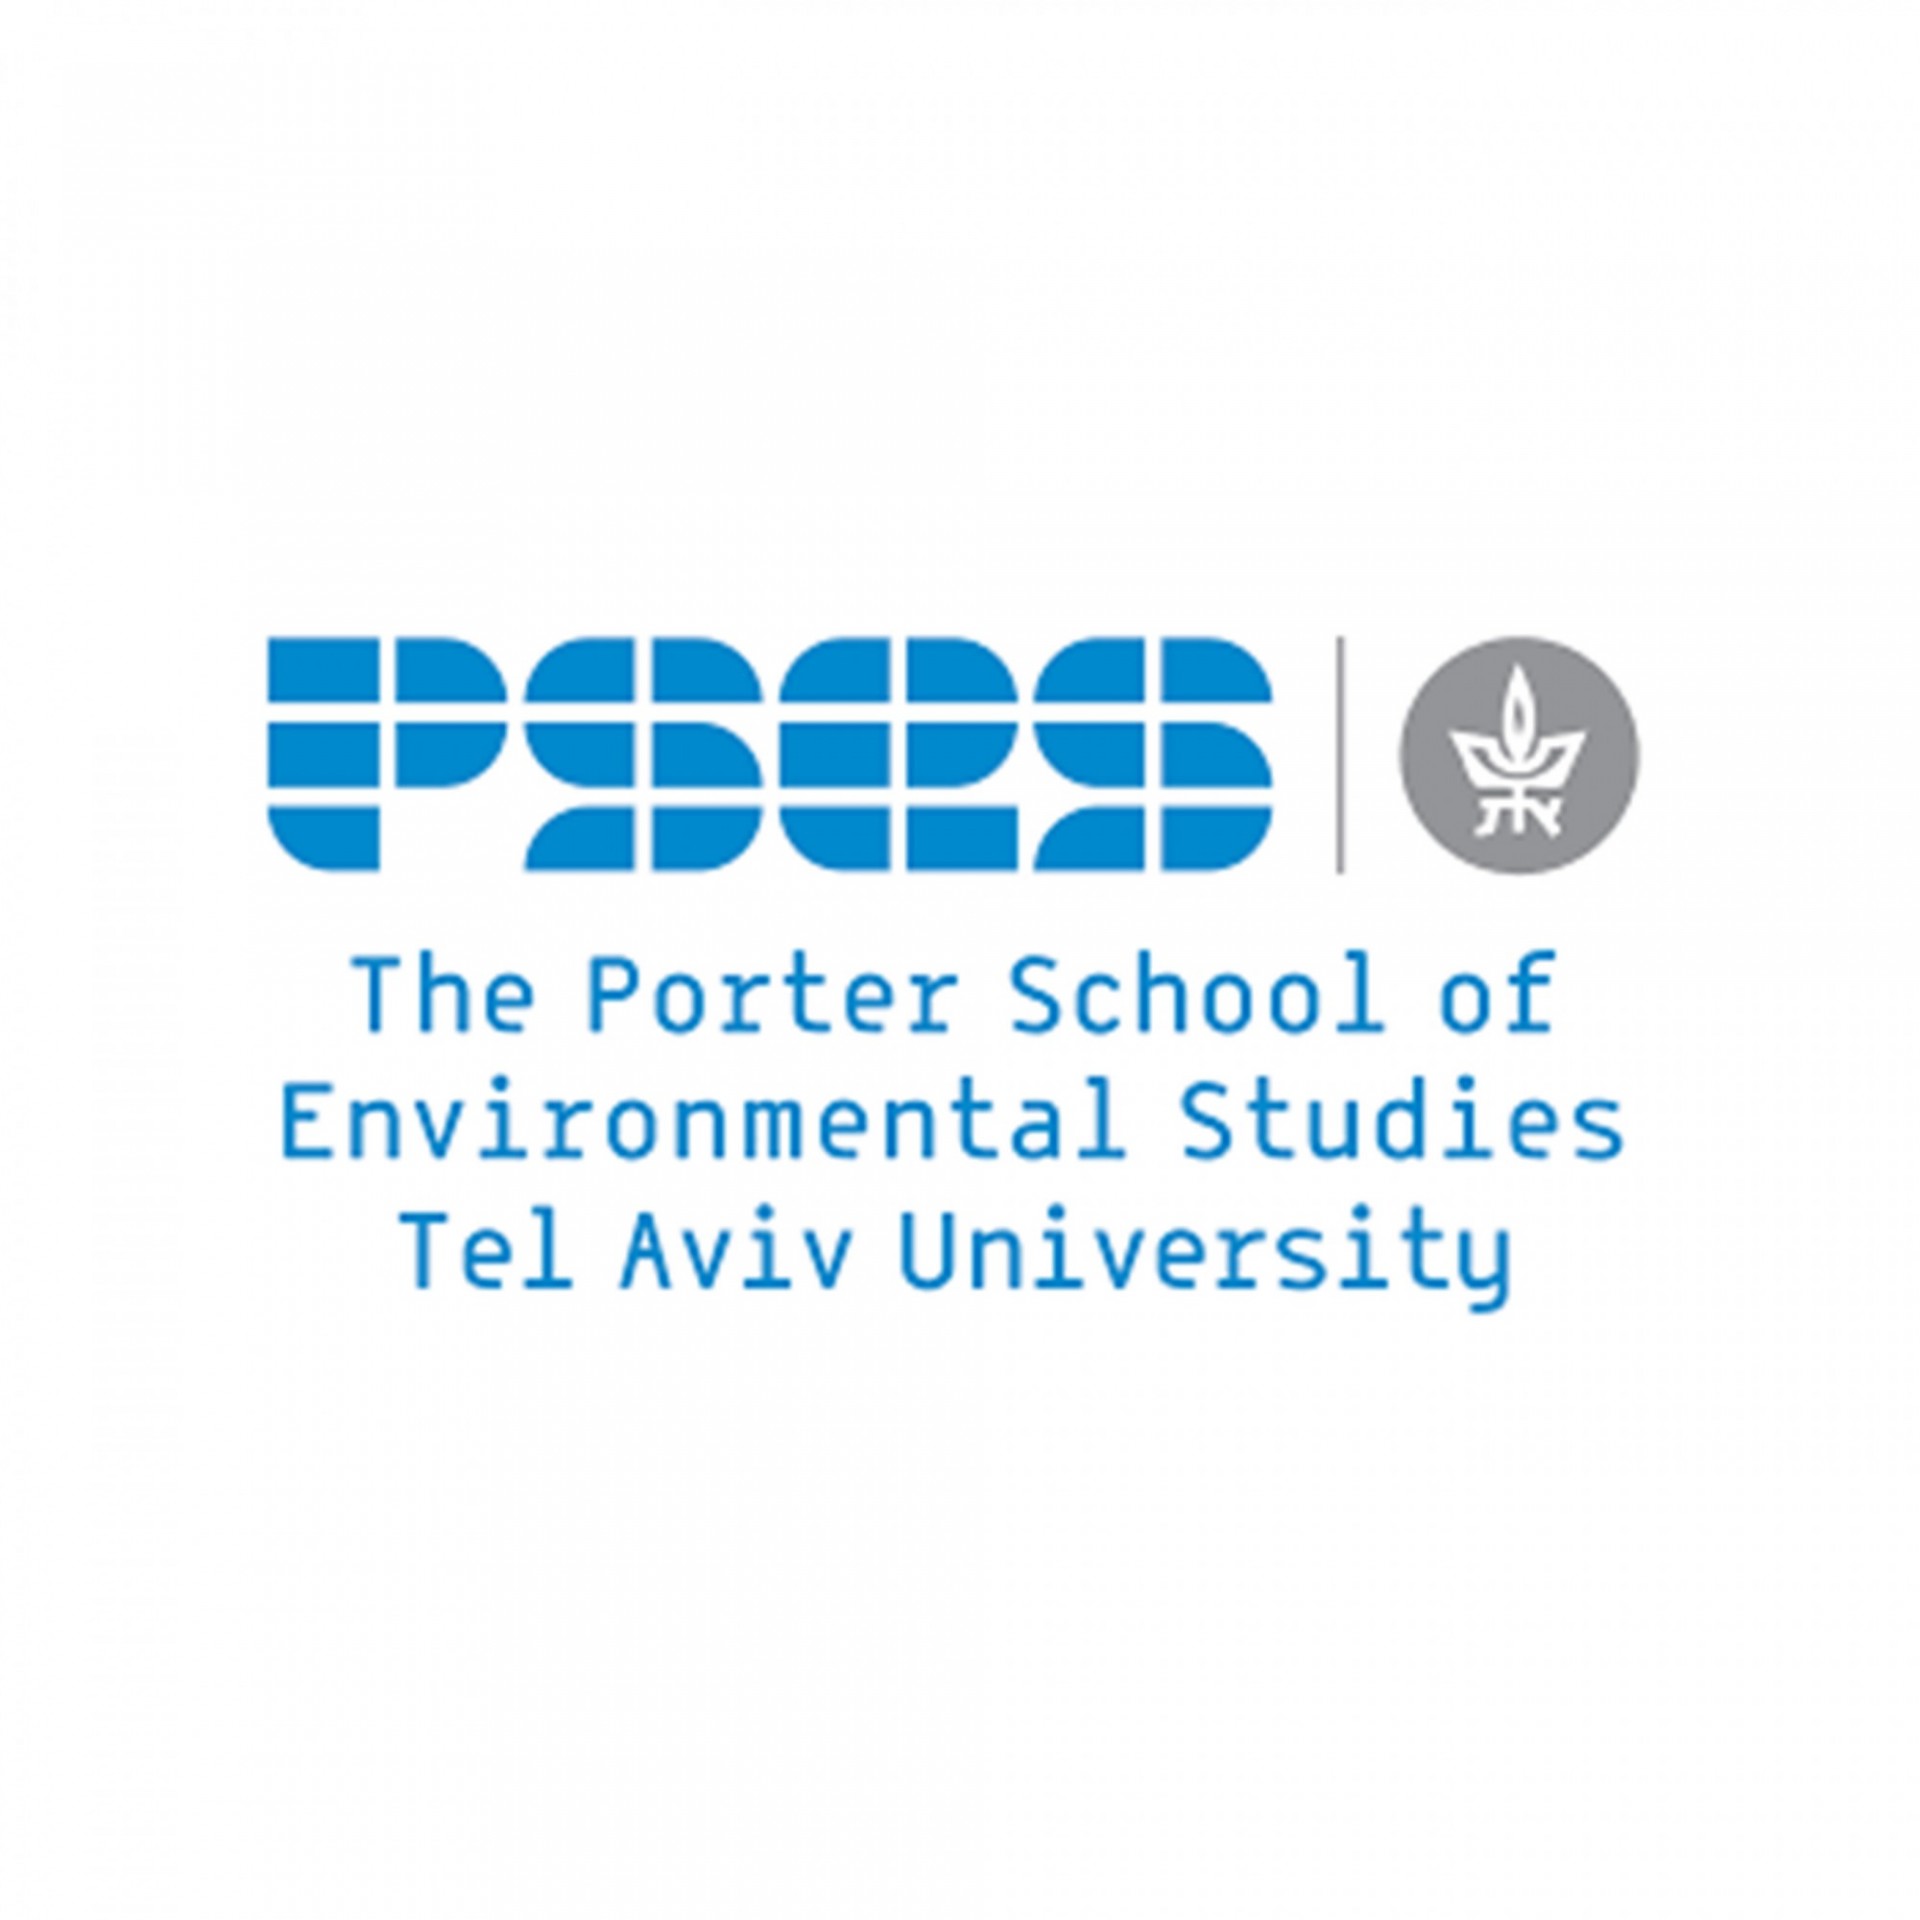 The Porter School of Environmental Studies at Tel Aviv University